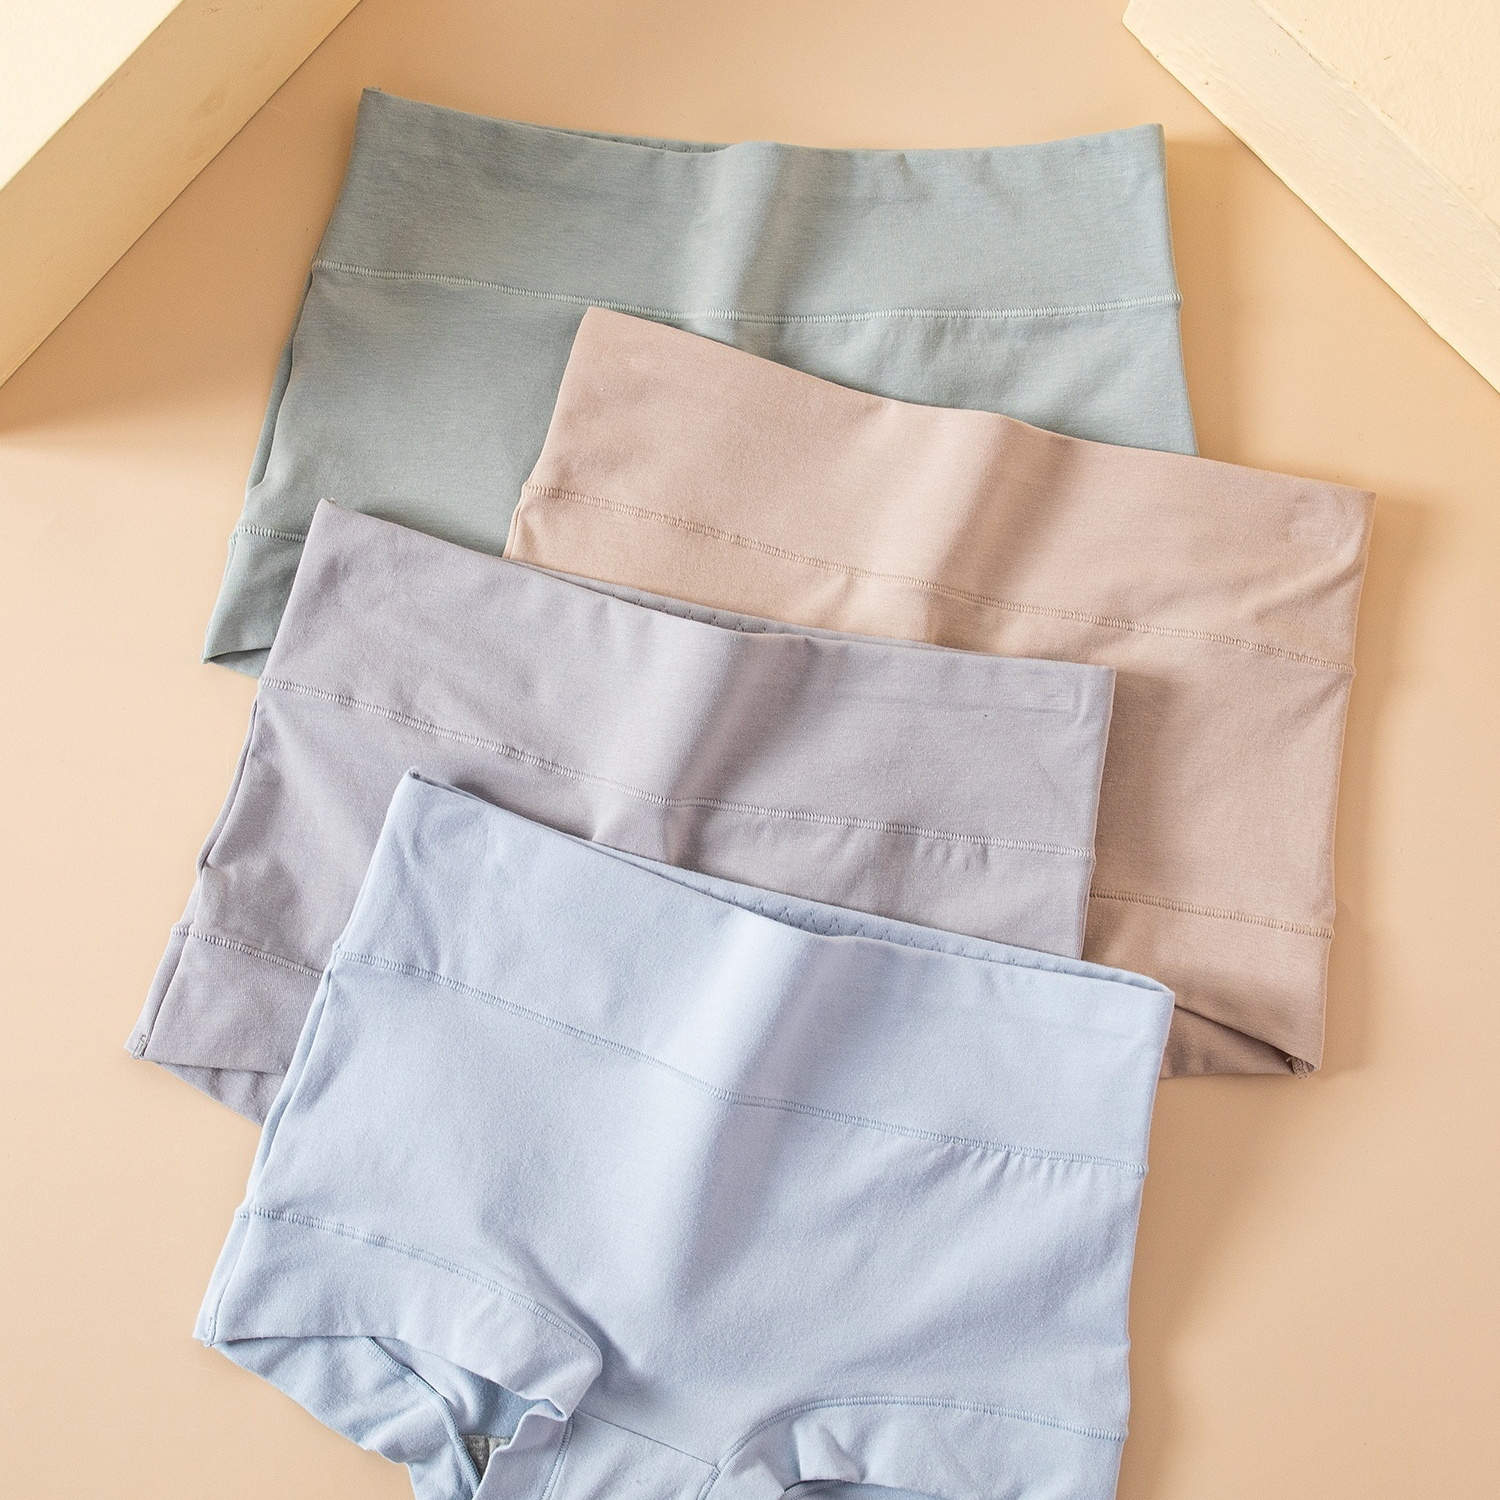 

4pcs Simple Solid Briefs, Comfy & Breathable Skin-friendly Intimates Panties, Women's Lingerie & Underwear